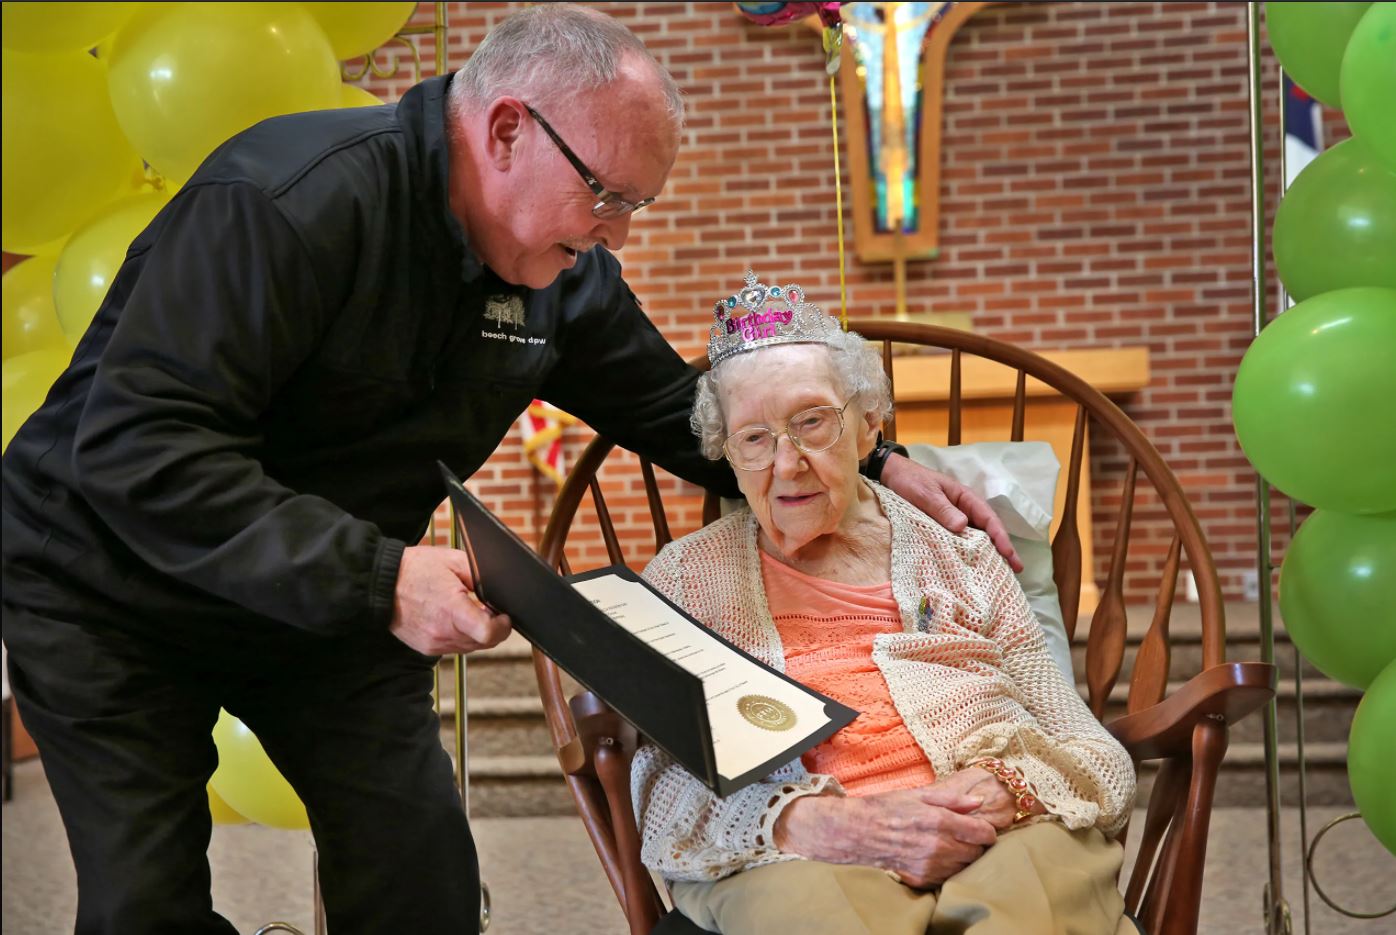 A man shows a certificate to an elderly woman. 